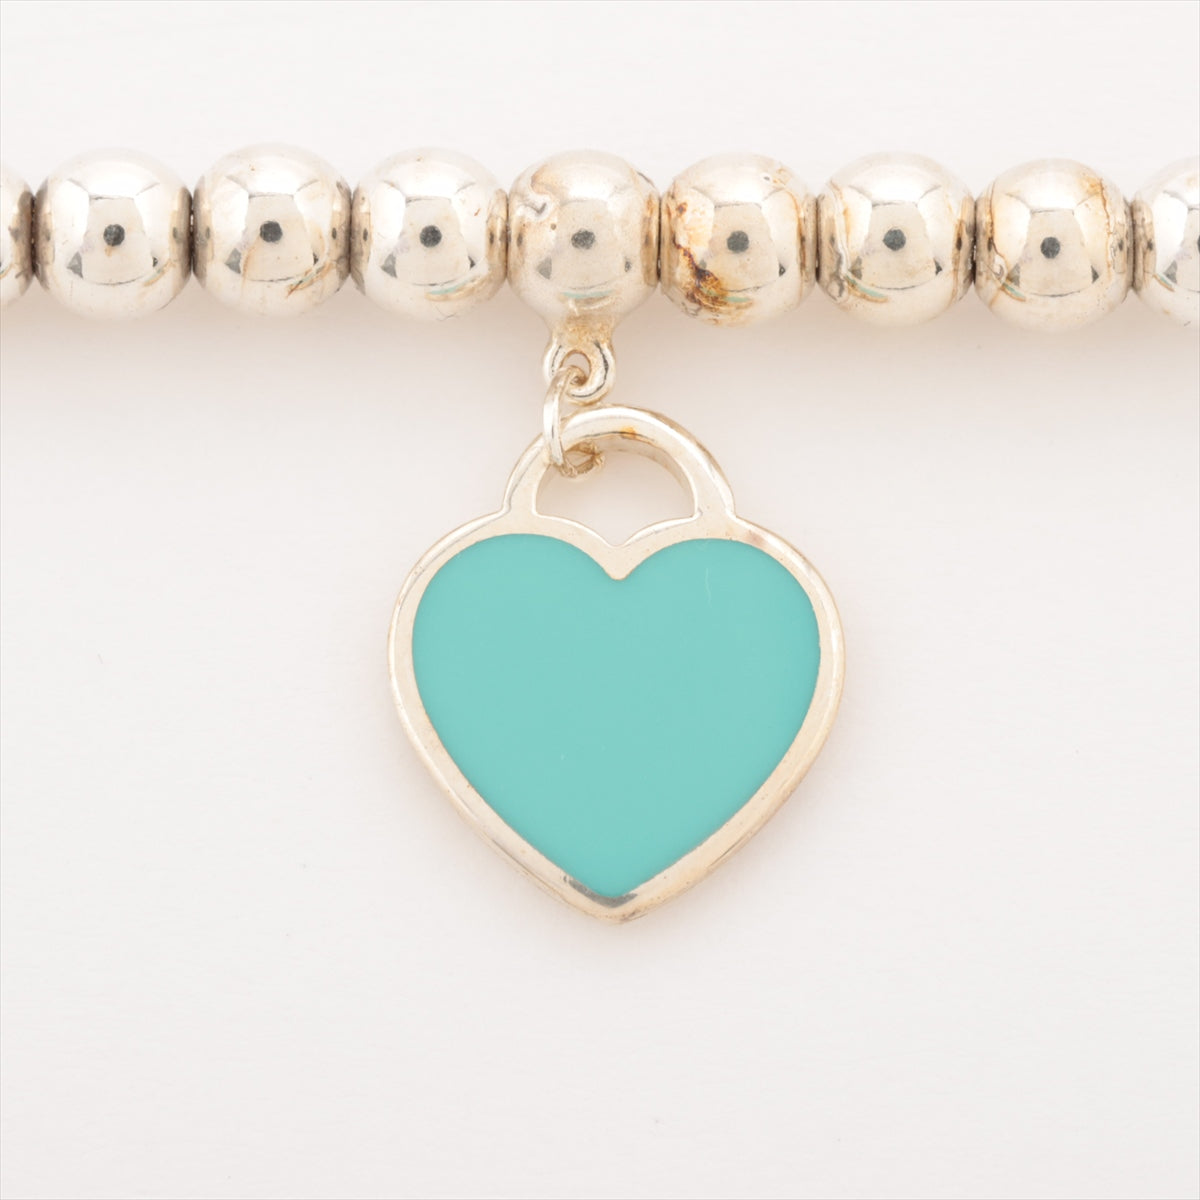 Tiffany Return To Tiffany Heart Tag Bracelet 925 5.4g Silver Ball Chain